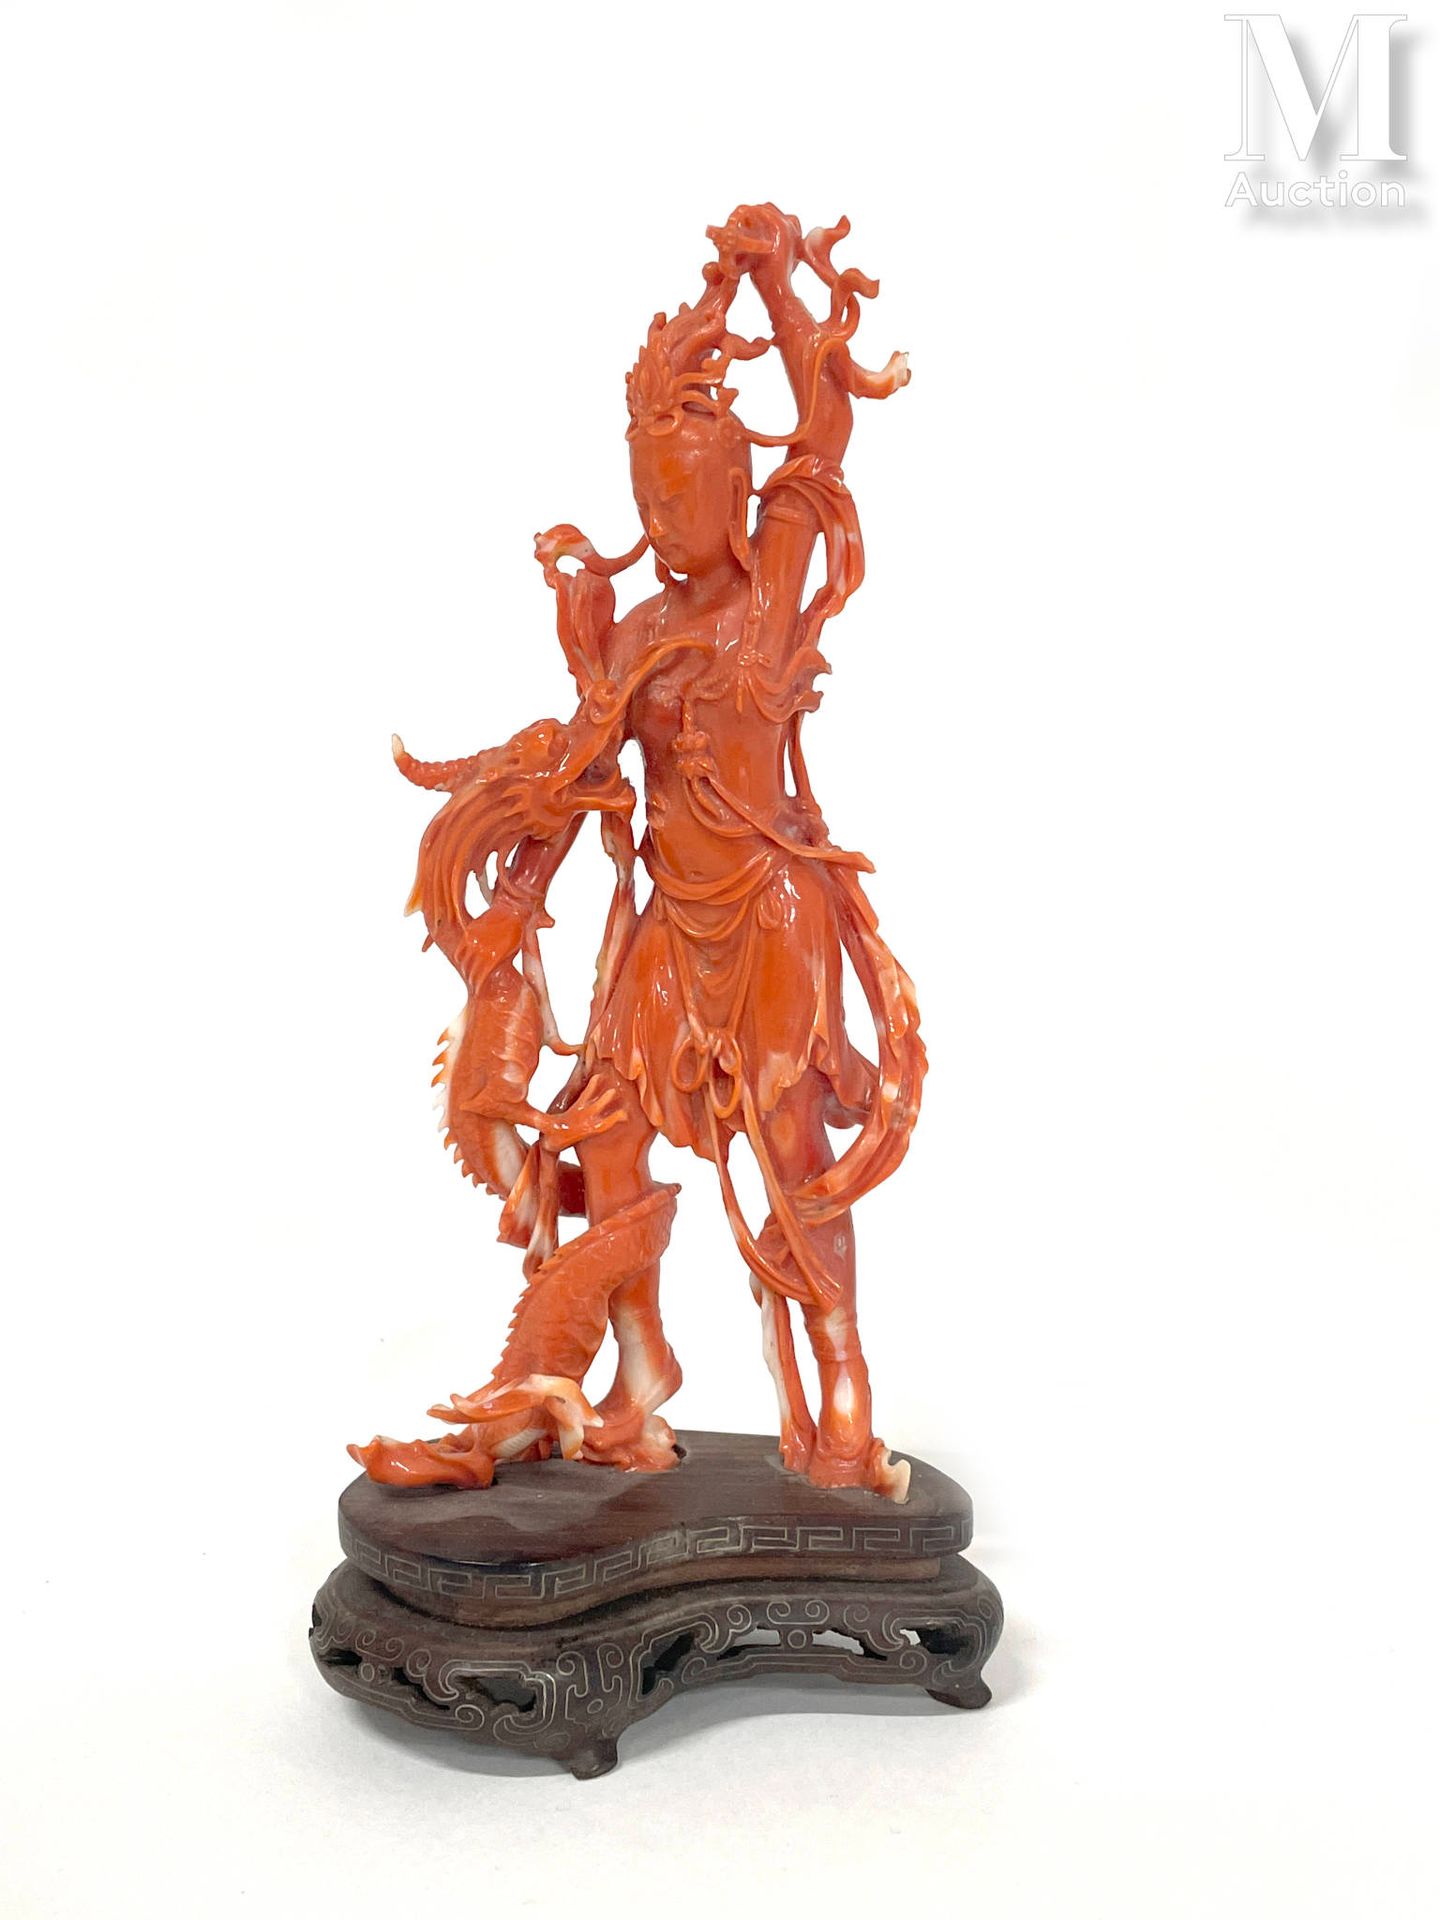 CHINE, XXe siècle 橙色珊瑚雕像

表现了一个站立的观世音菩萨挥舞着她的金刚杵向一条身体缠绕在她腿上的龙。放在一个合适的木质底座上。

高度：1&hellip;